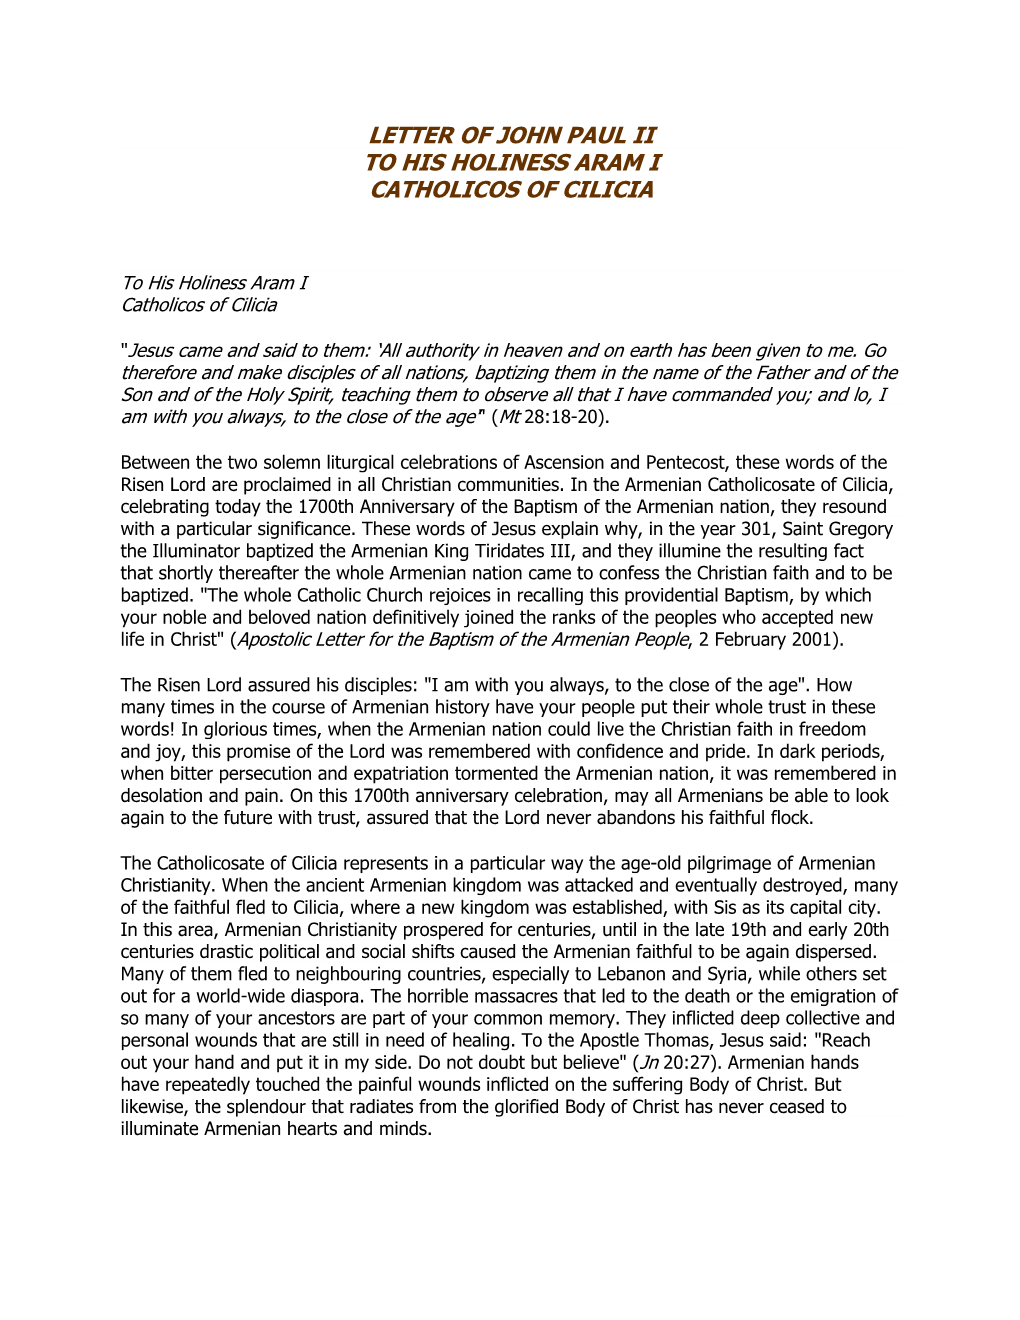 Letter of John Paul Ii to His Holiness Aram I Catholicos of Cilicia 20.V.2001